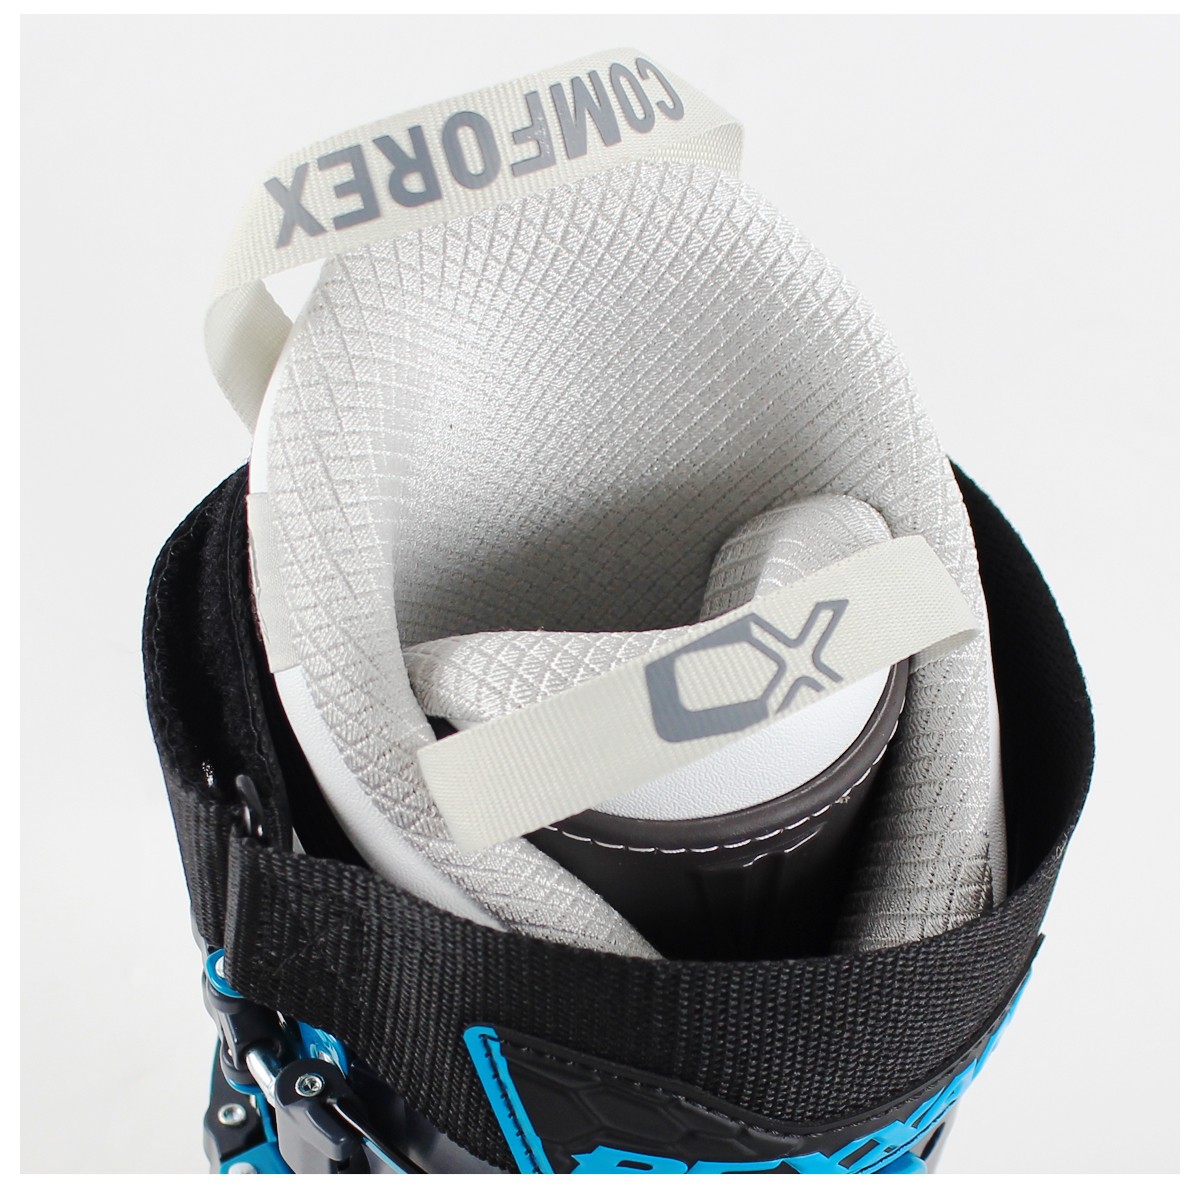 REXXAM R-EVO PLUS 90 - 2022 - Ski Shop - Japanese Brand Ski Gear 